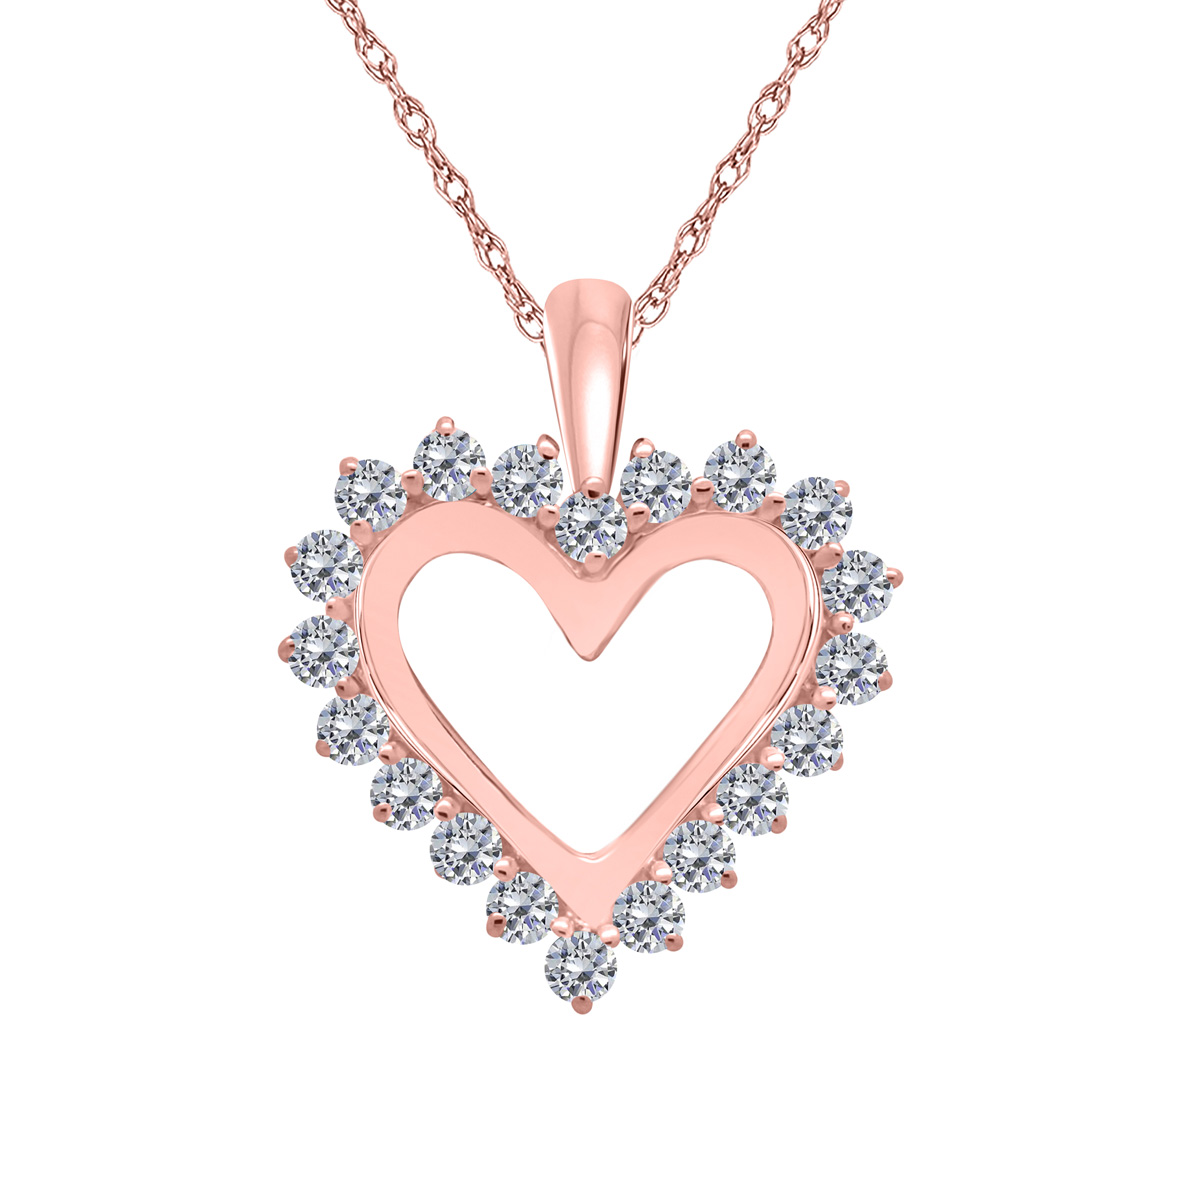 Aone Necklace Women 1 CTW Open Heart Diamond Pendant 4 prongs 10K Rose Gold 18'' Chain